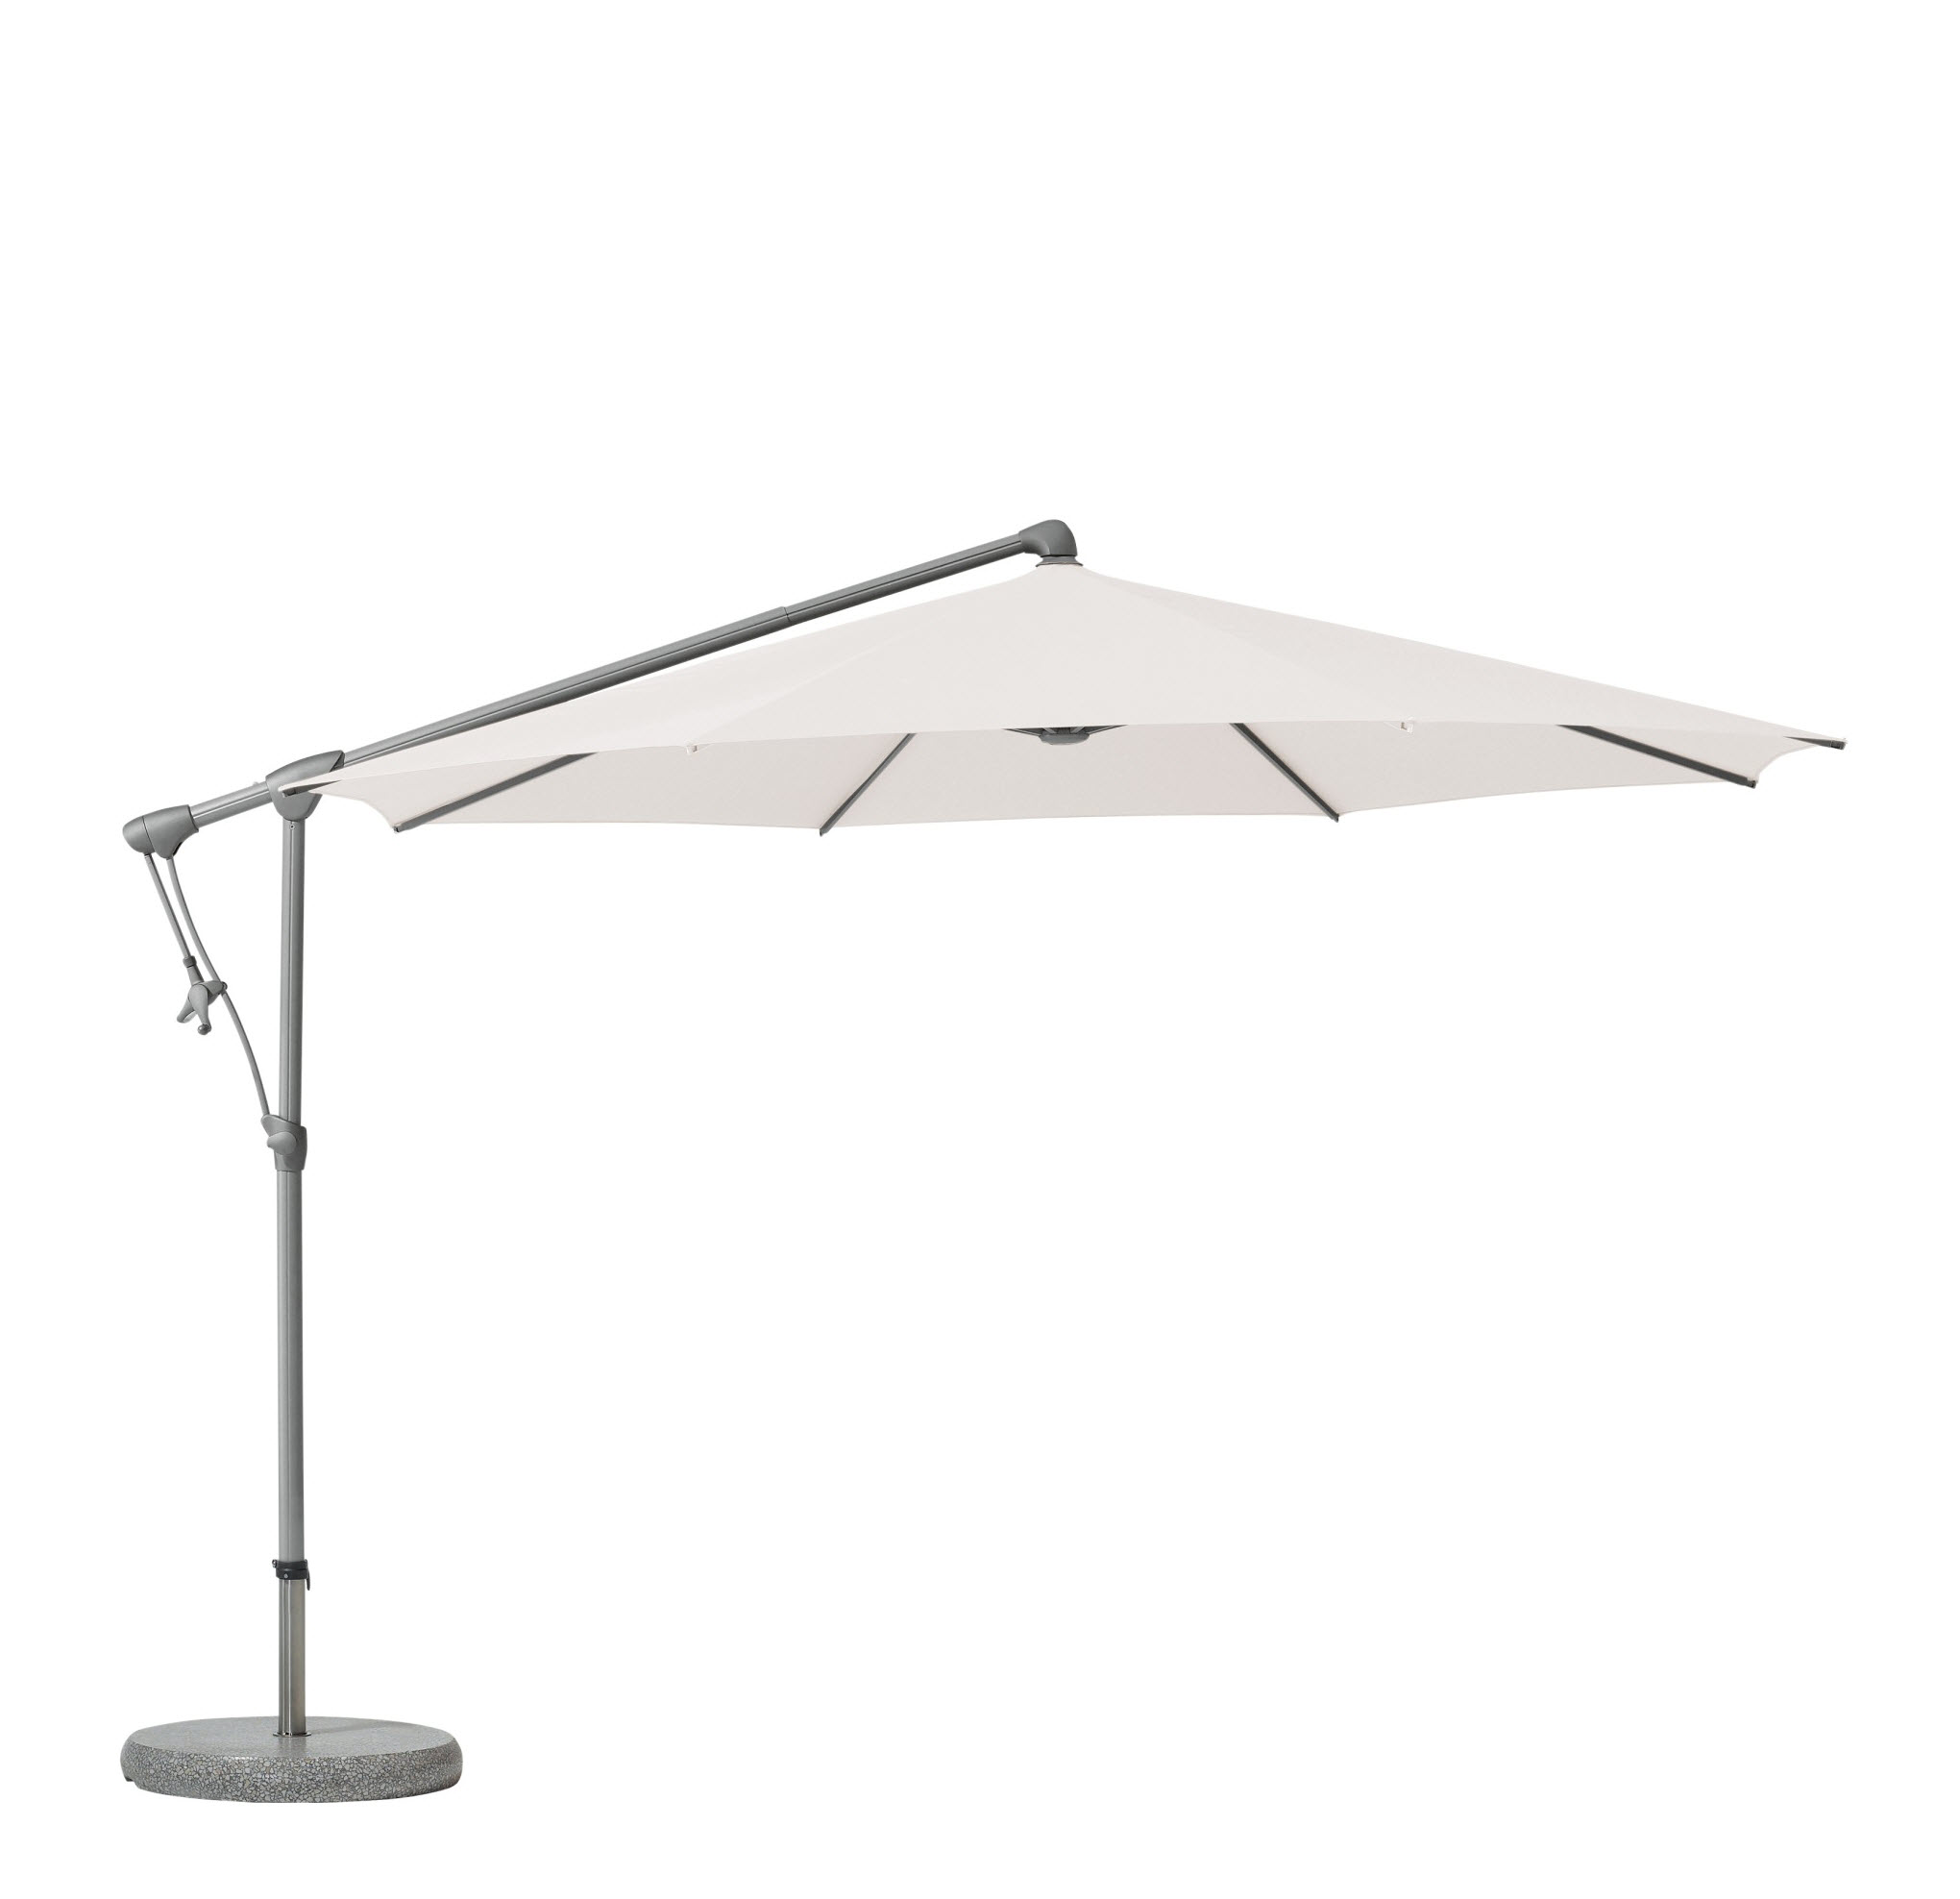 Sunwing C+ parasol 330 cm - Off white 453 - van Valderen